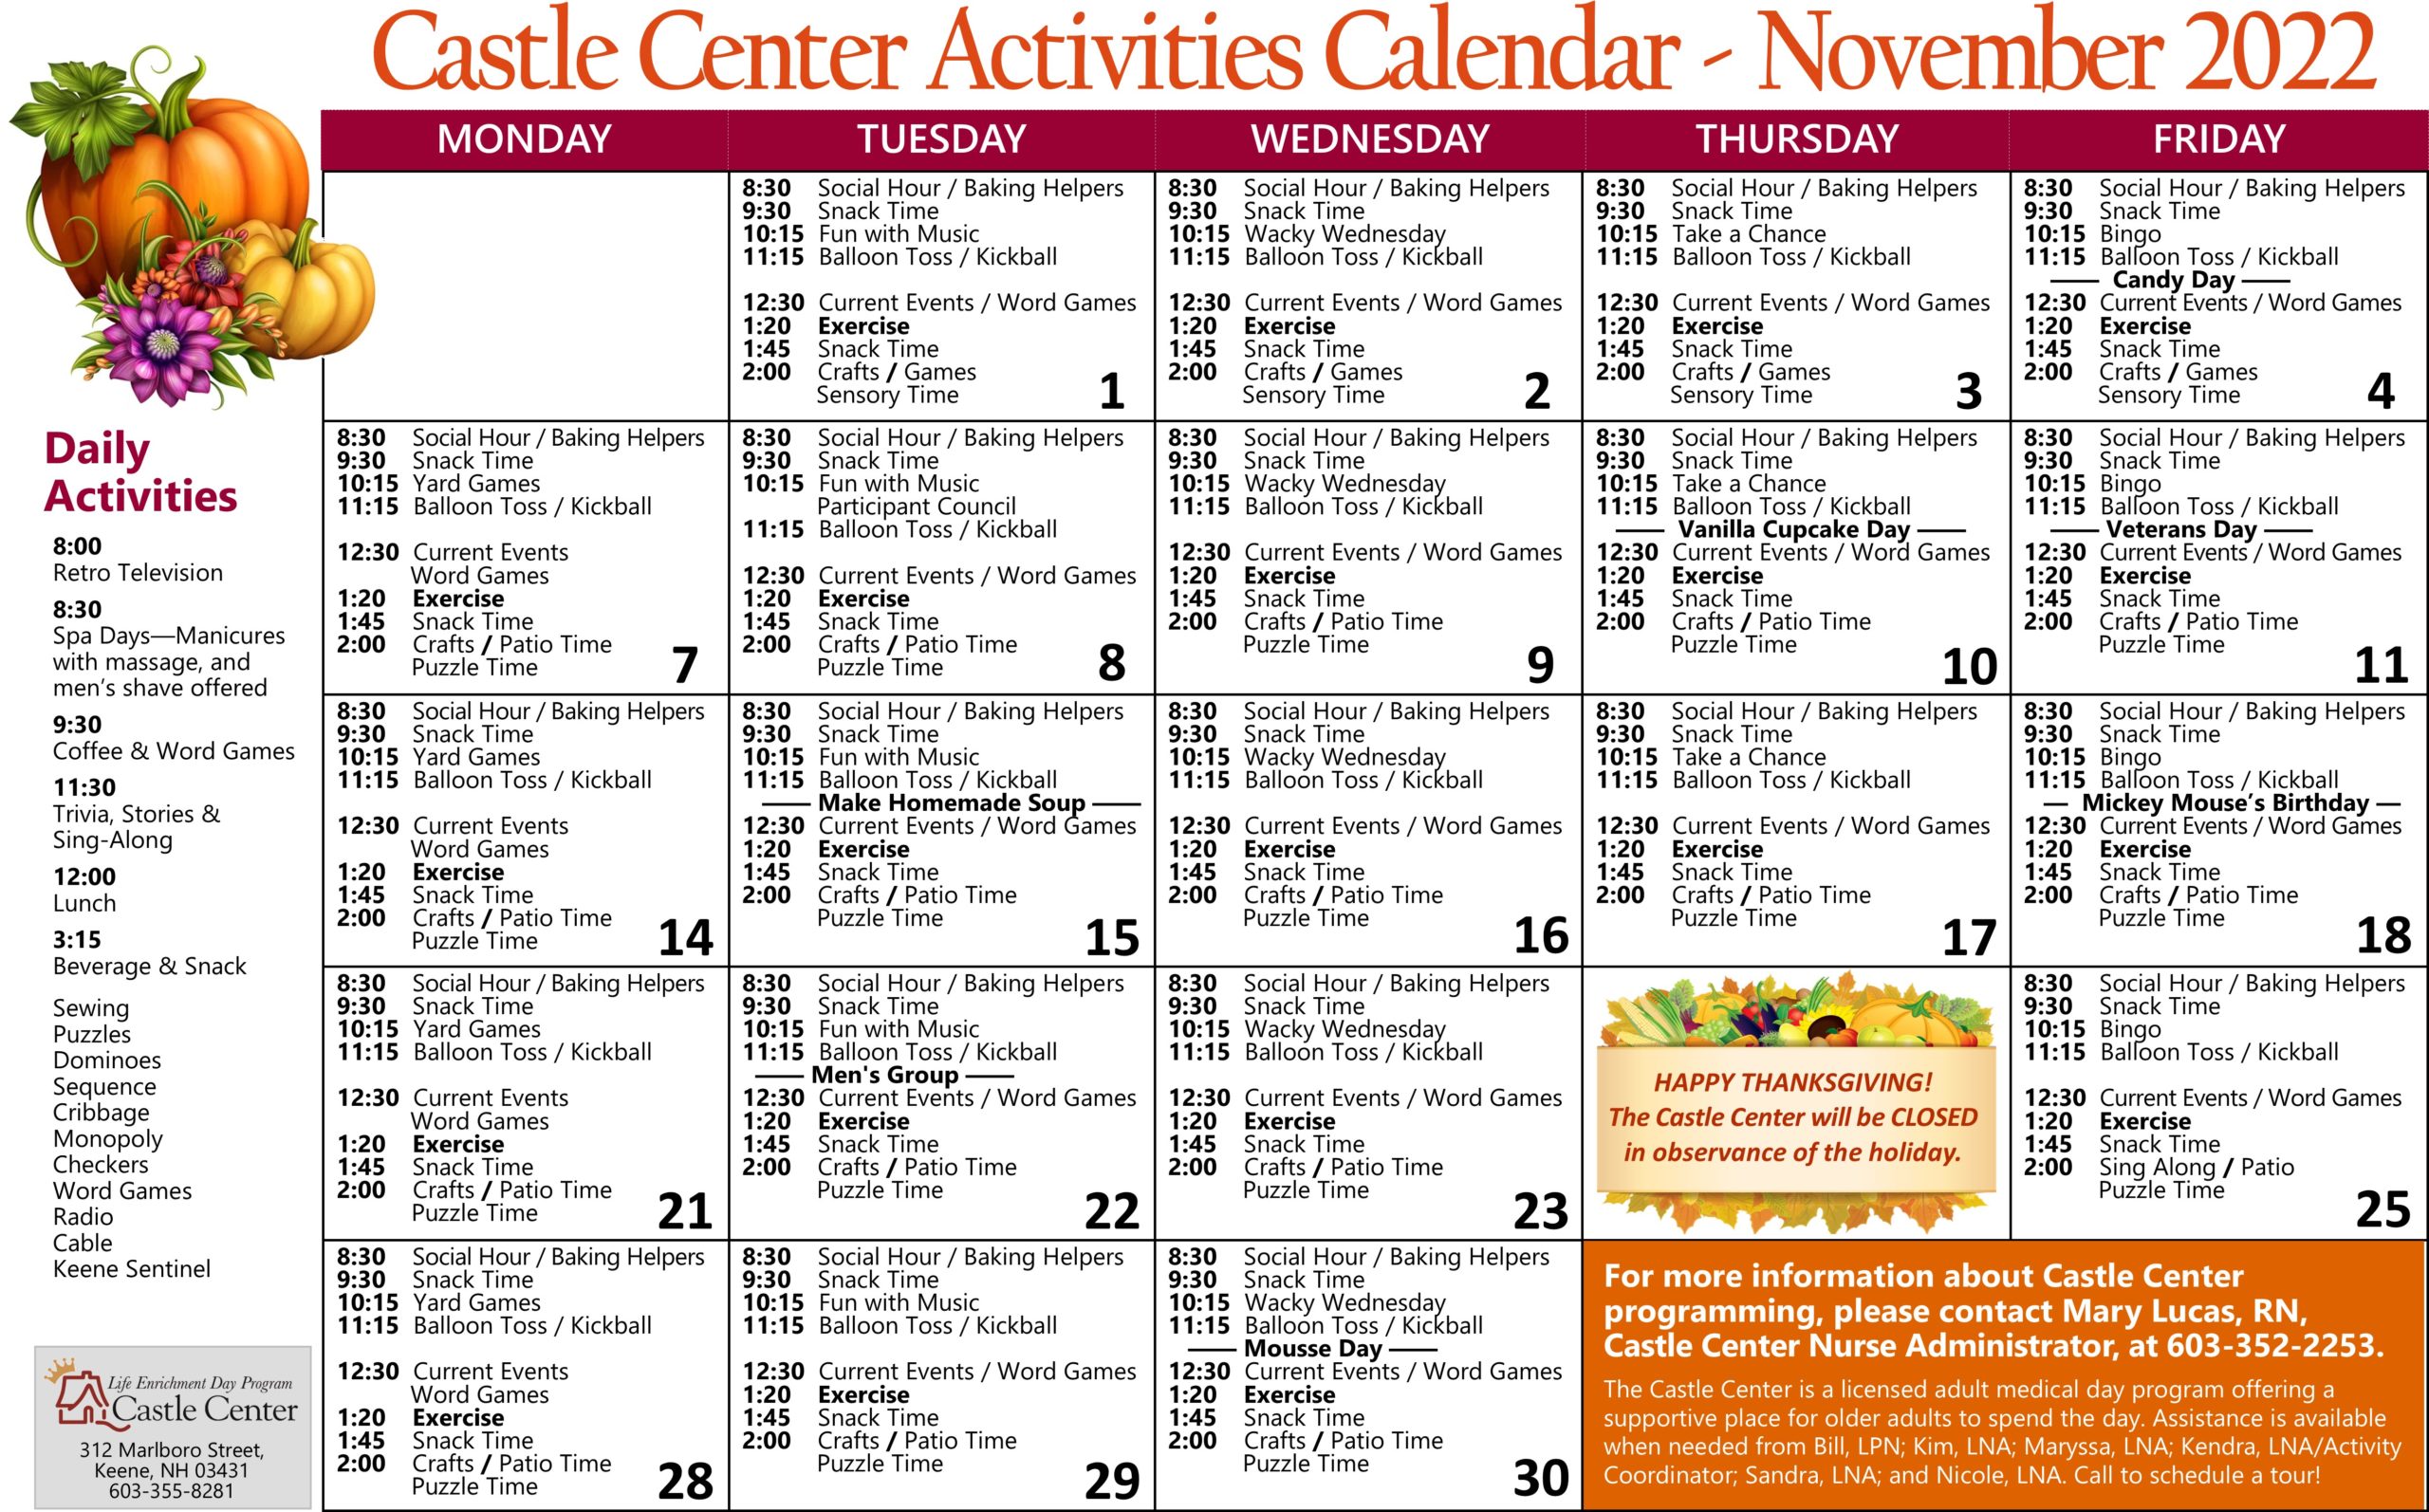 Castle Center Activities for November 2022